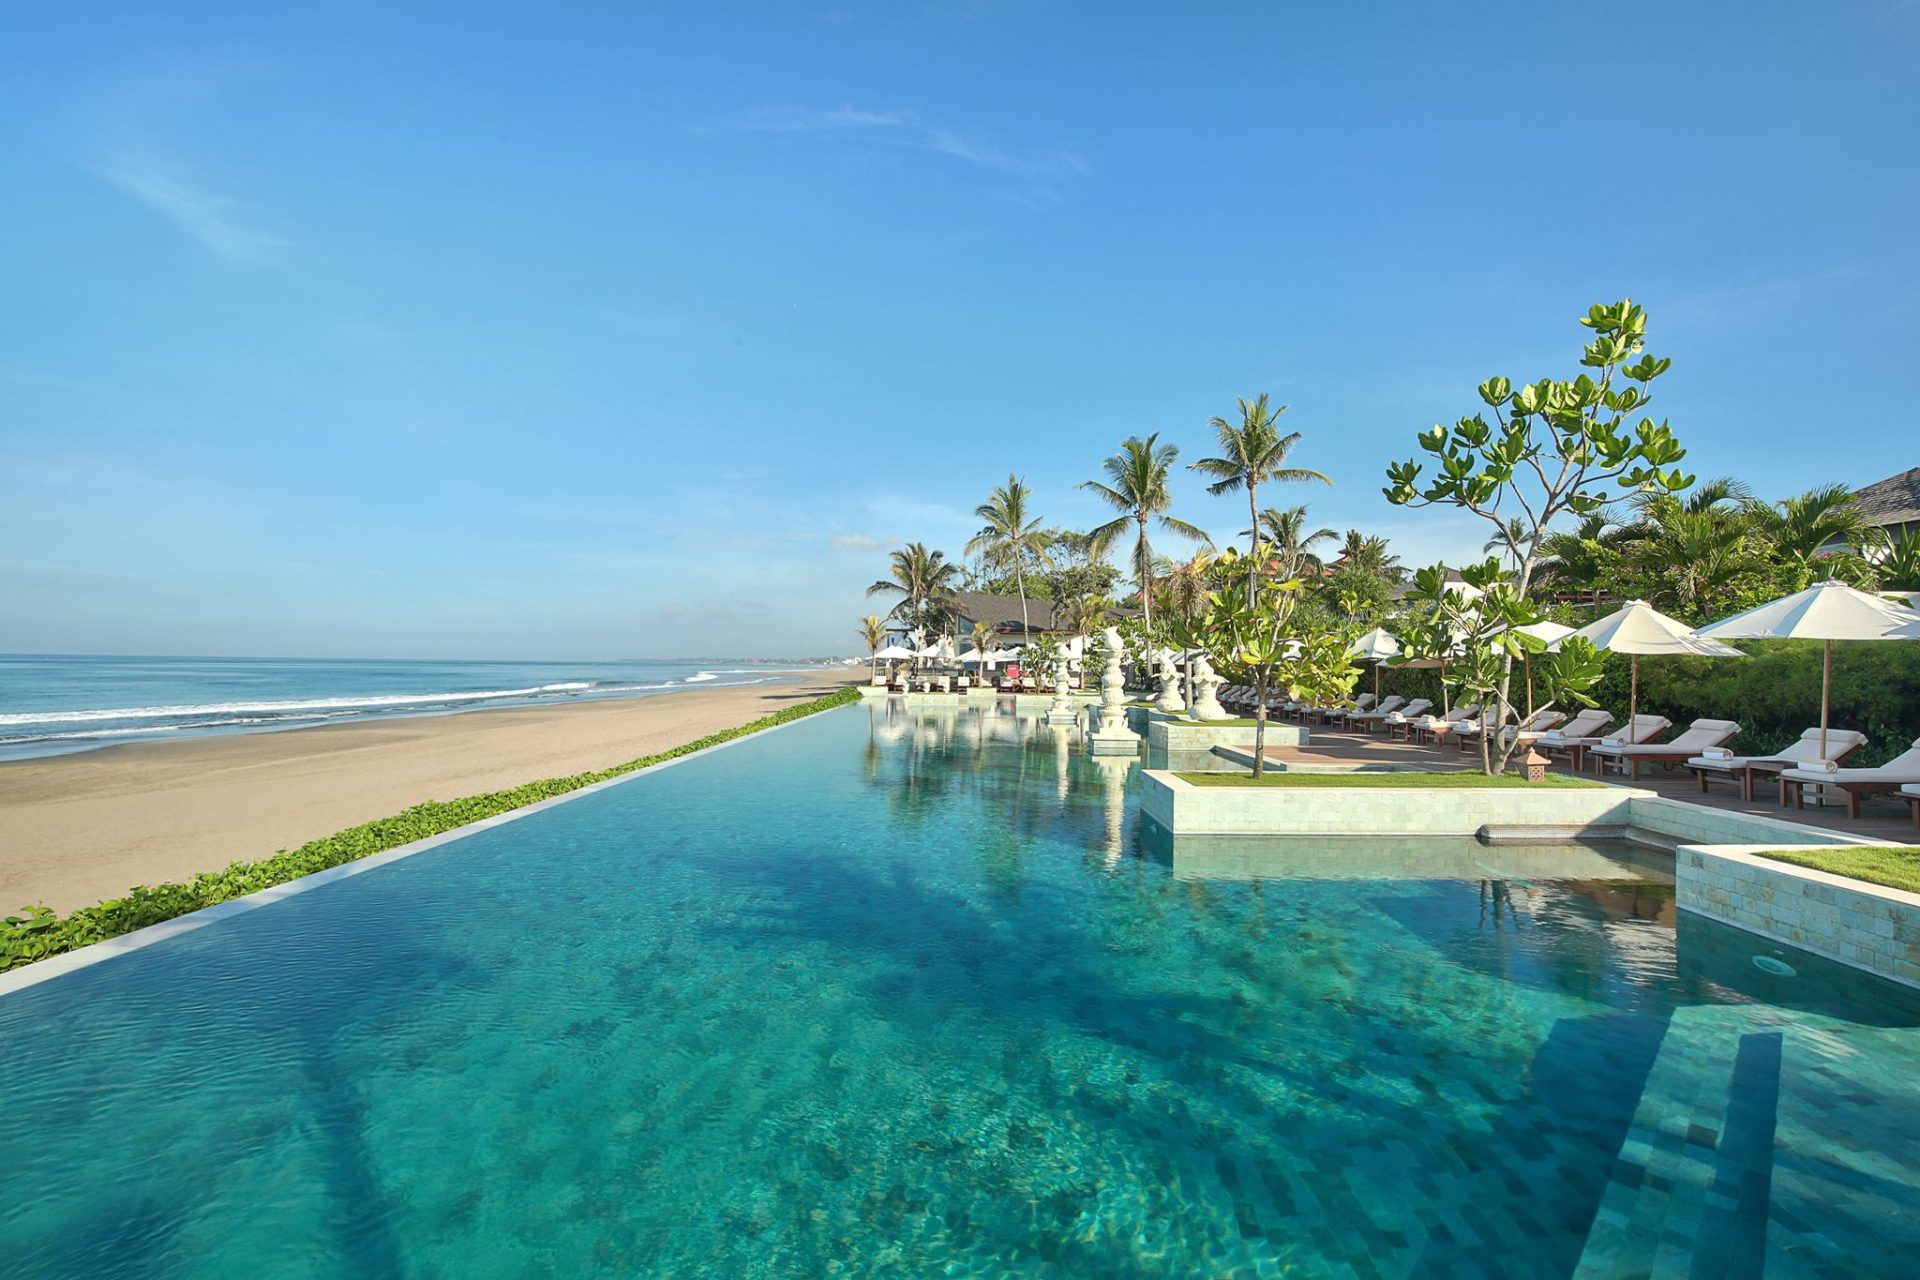 The Best Luxury Hotels in Bali by Luxury Lifestyle Awards - Luxury